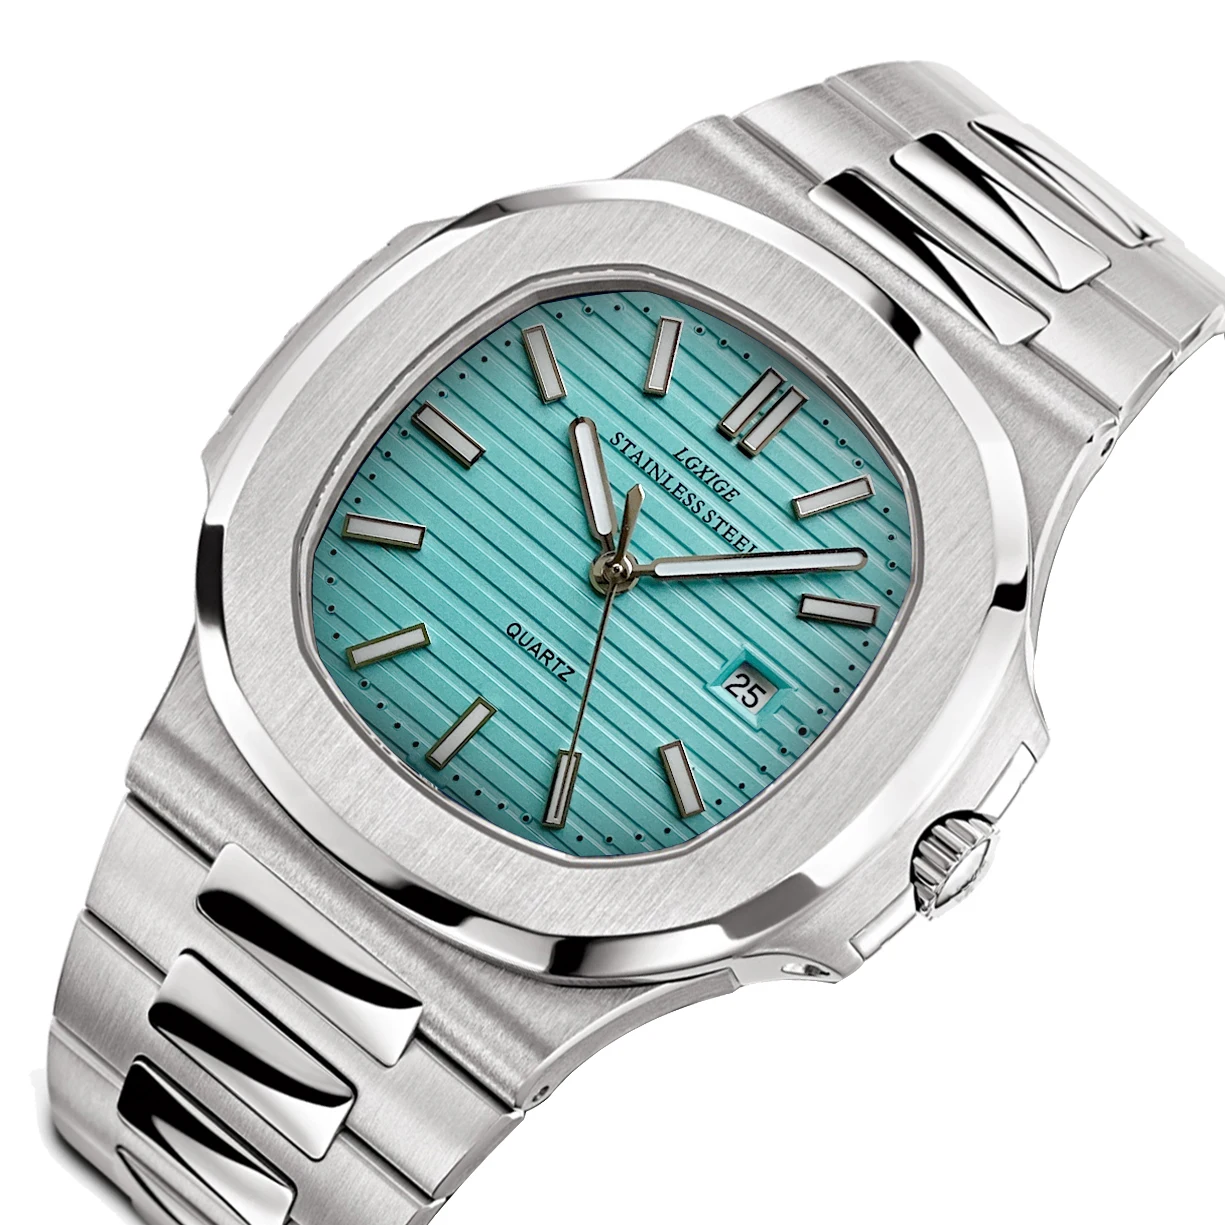 LGXIGE NewTOP Luxury Brand Japan Quartz Watches Men Stainless Steel Military Watch Causal Fashion Business Clock Male Wristwatch